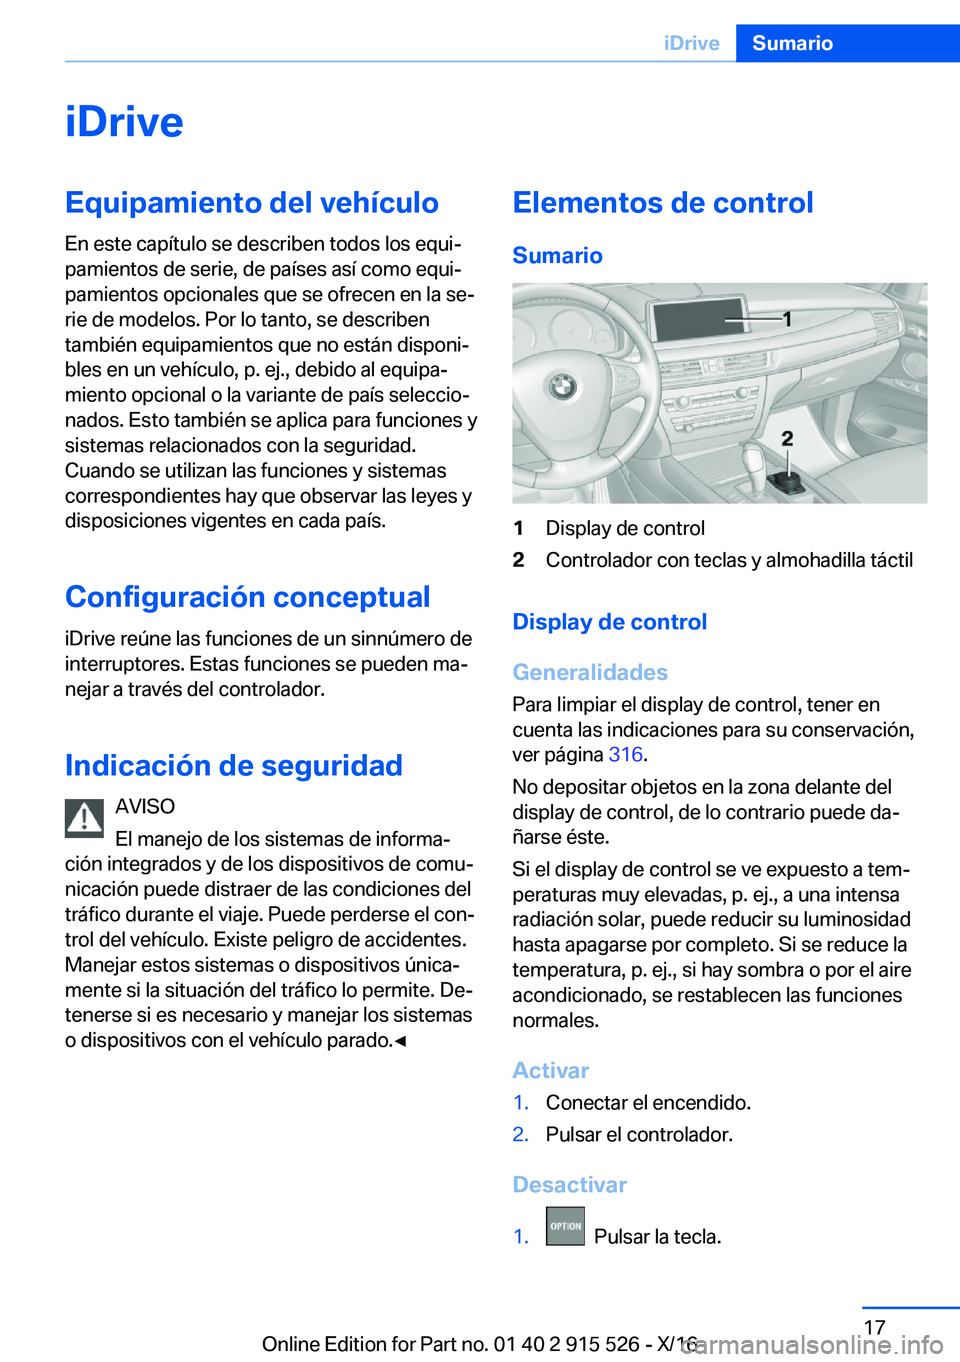 BMW X5 2017  Manuales de Empleo (in Spanish) �i�D�r�i�v�e�E�q�u�i�p�a�m�i�e�n�t�o��d�e�l��v�e�h�